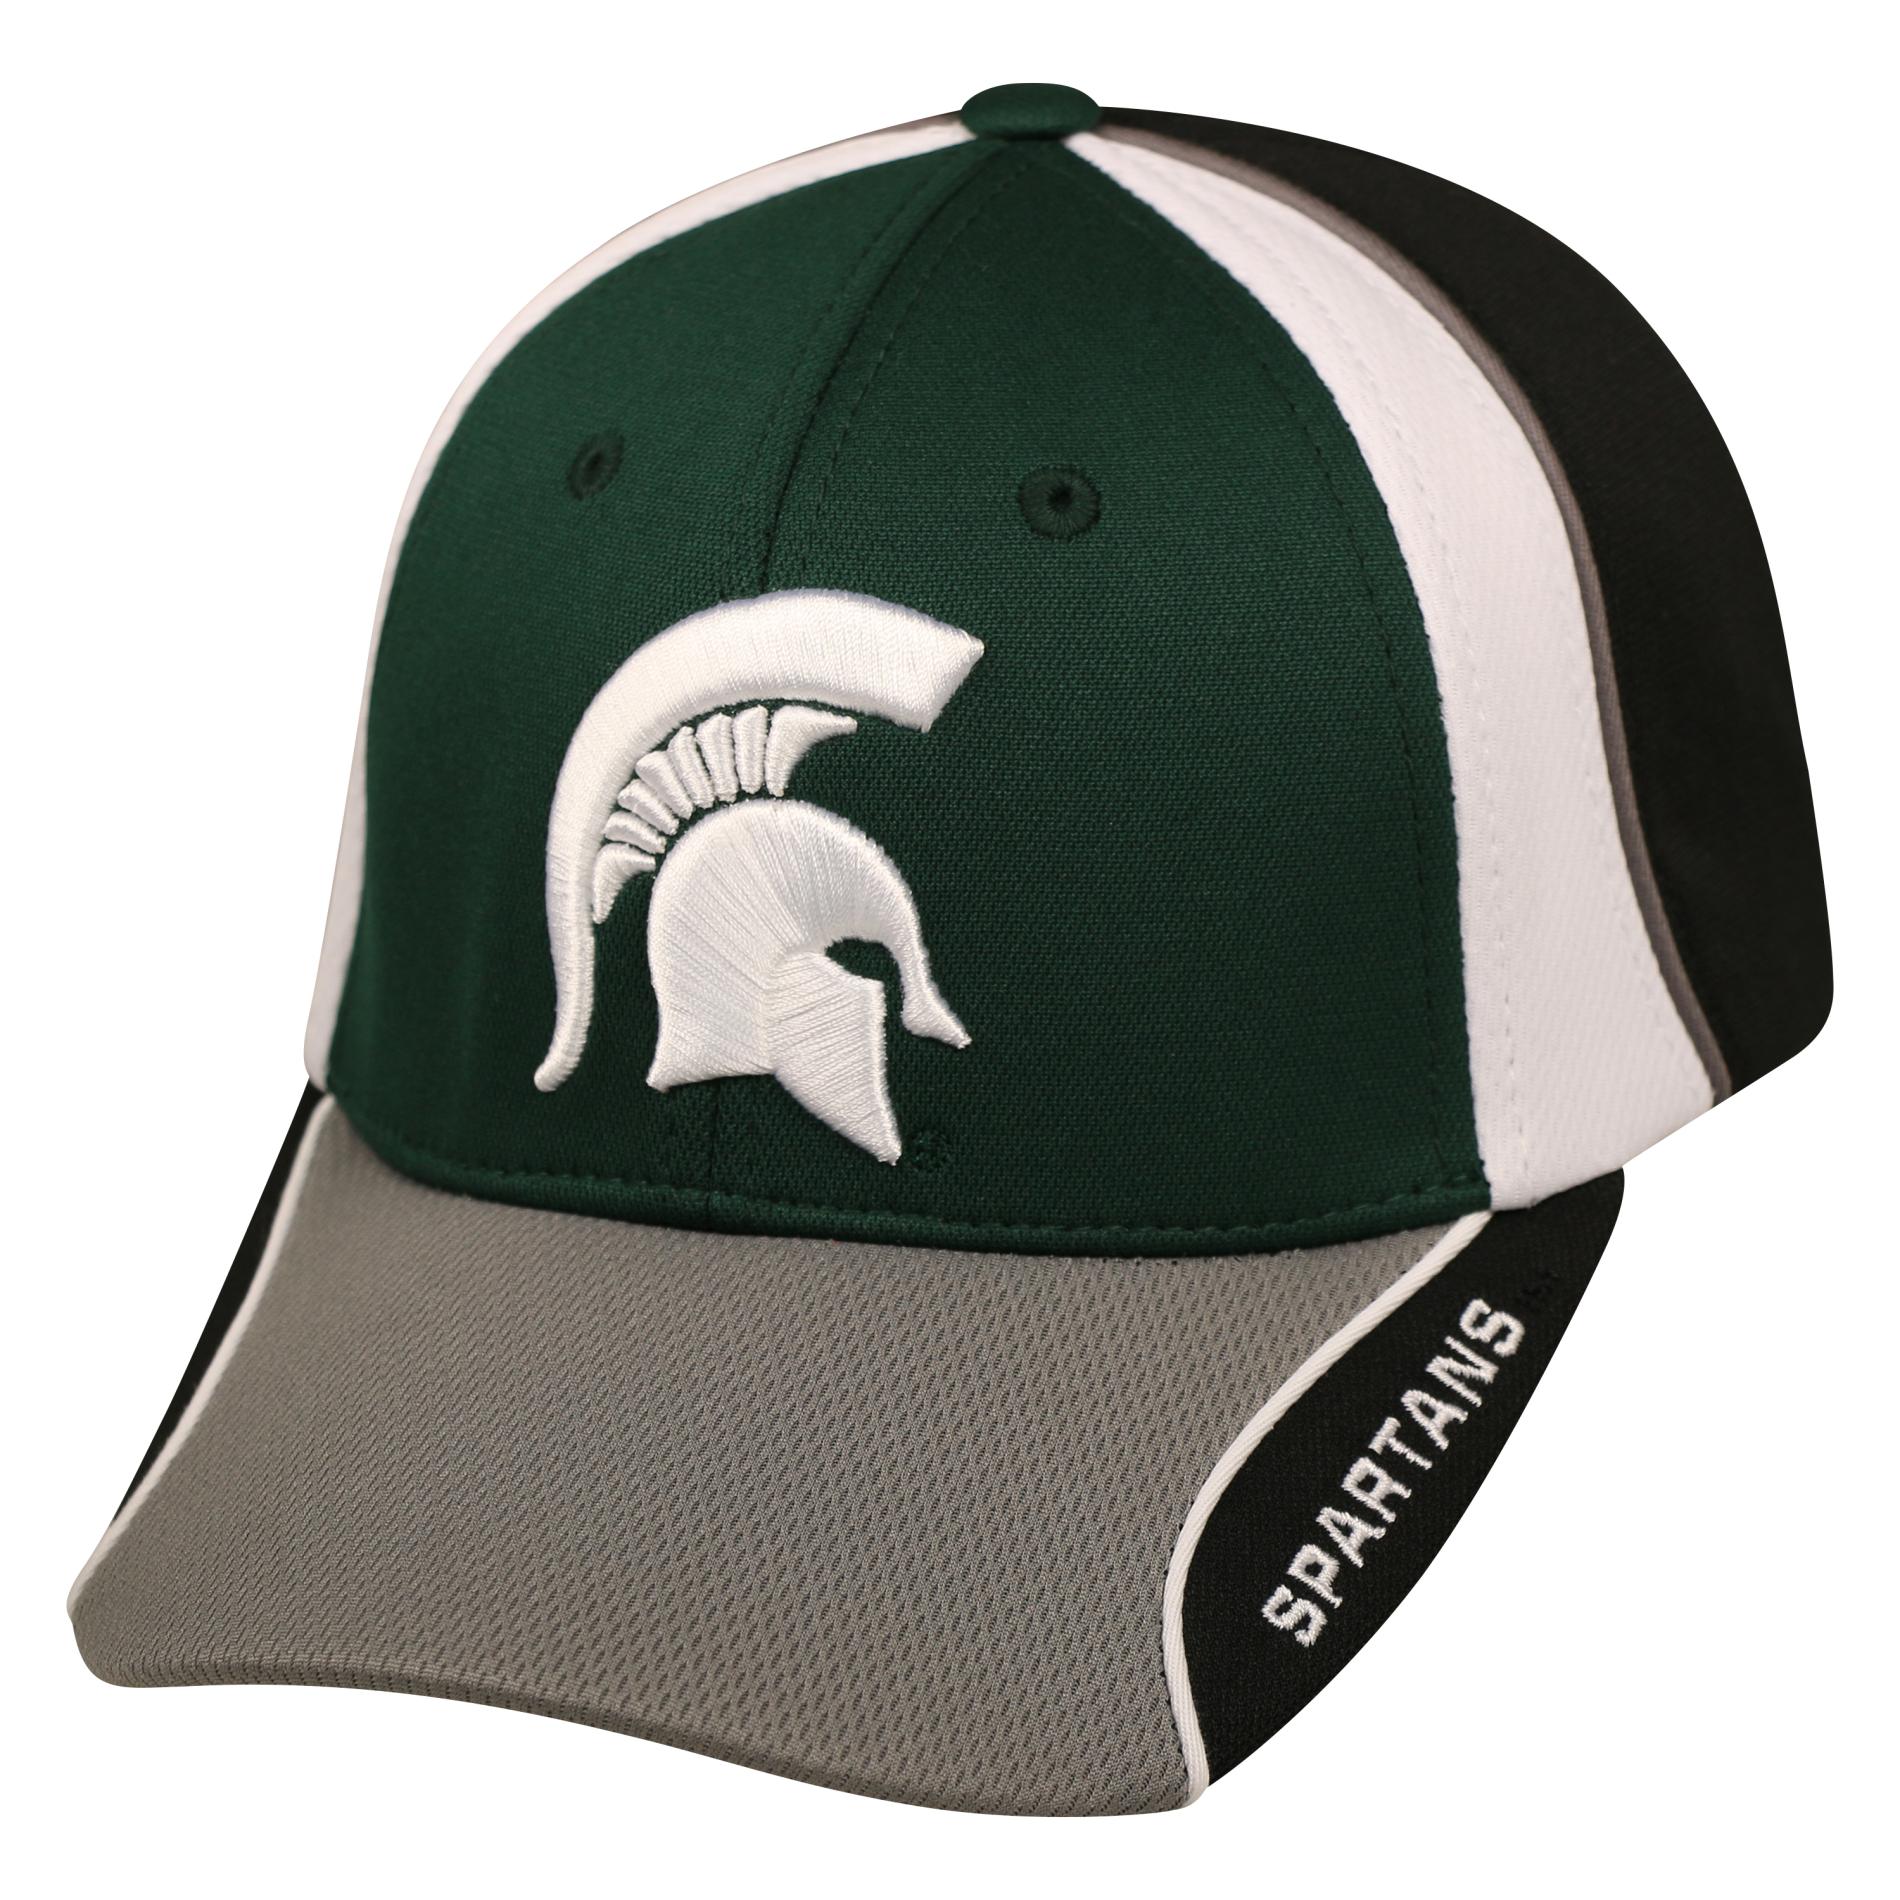 NCAA Men's Baseball Hat - Michigan State University Spartans